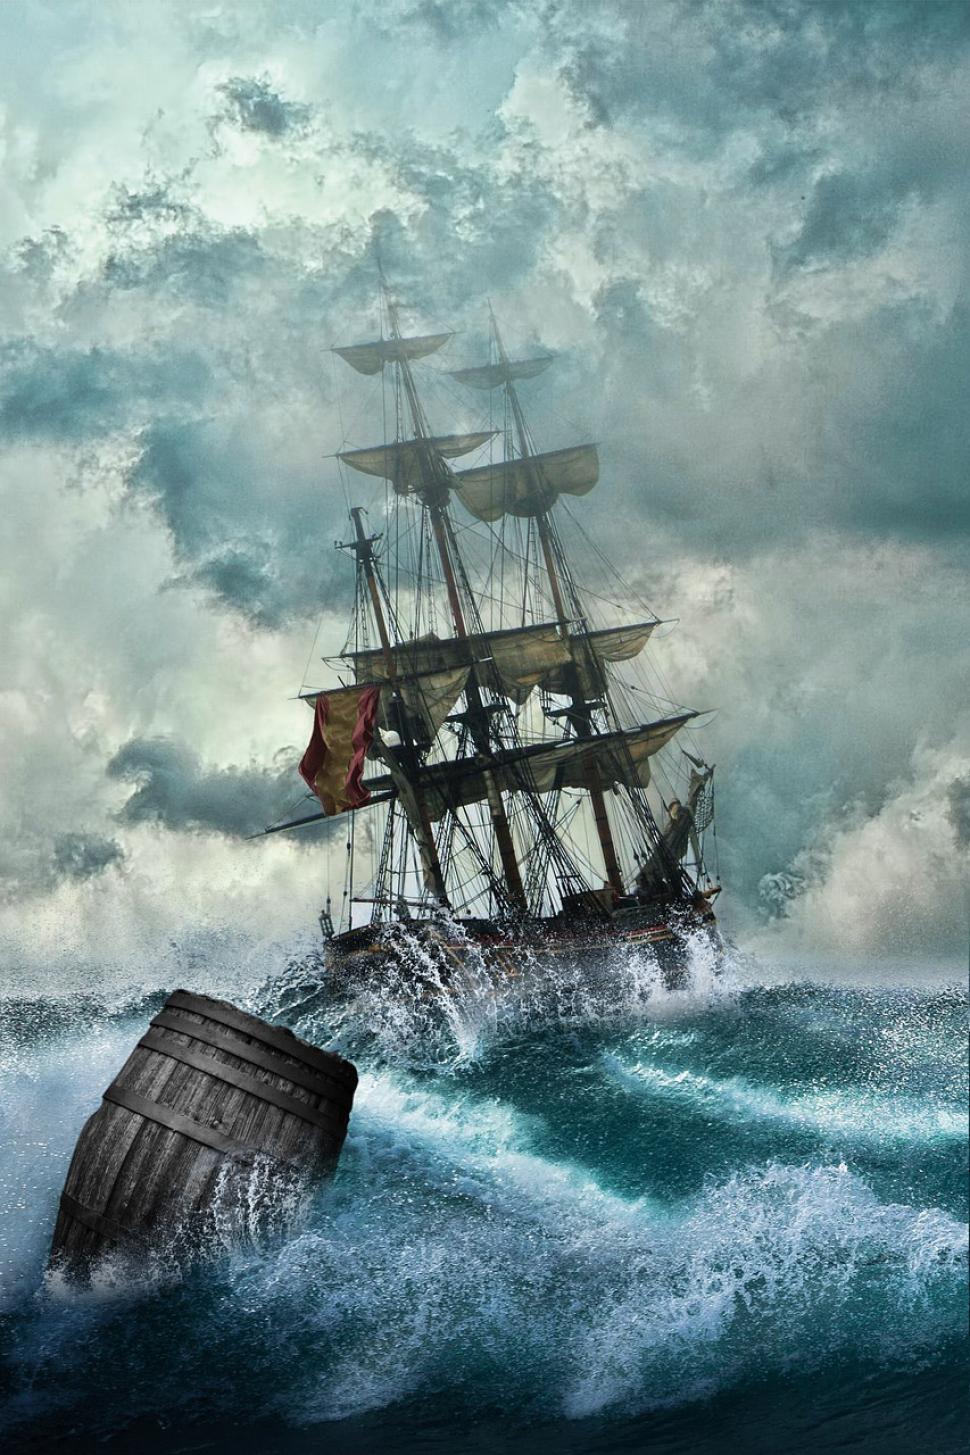 Free Image of Ship Battling Rough Seas 